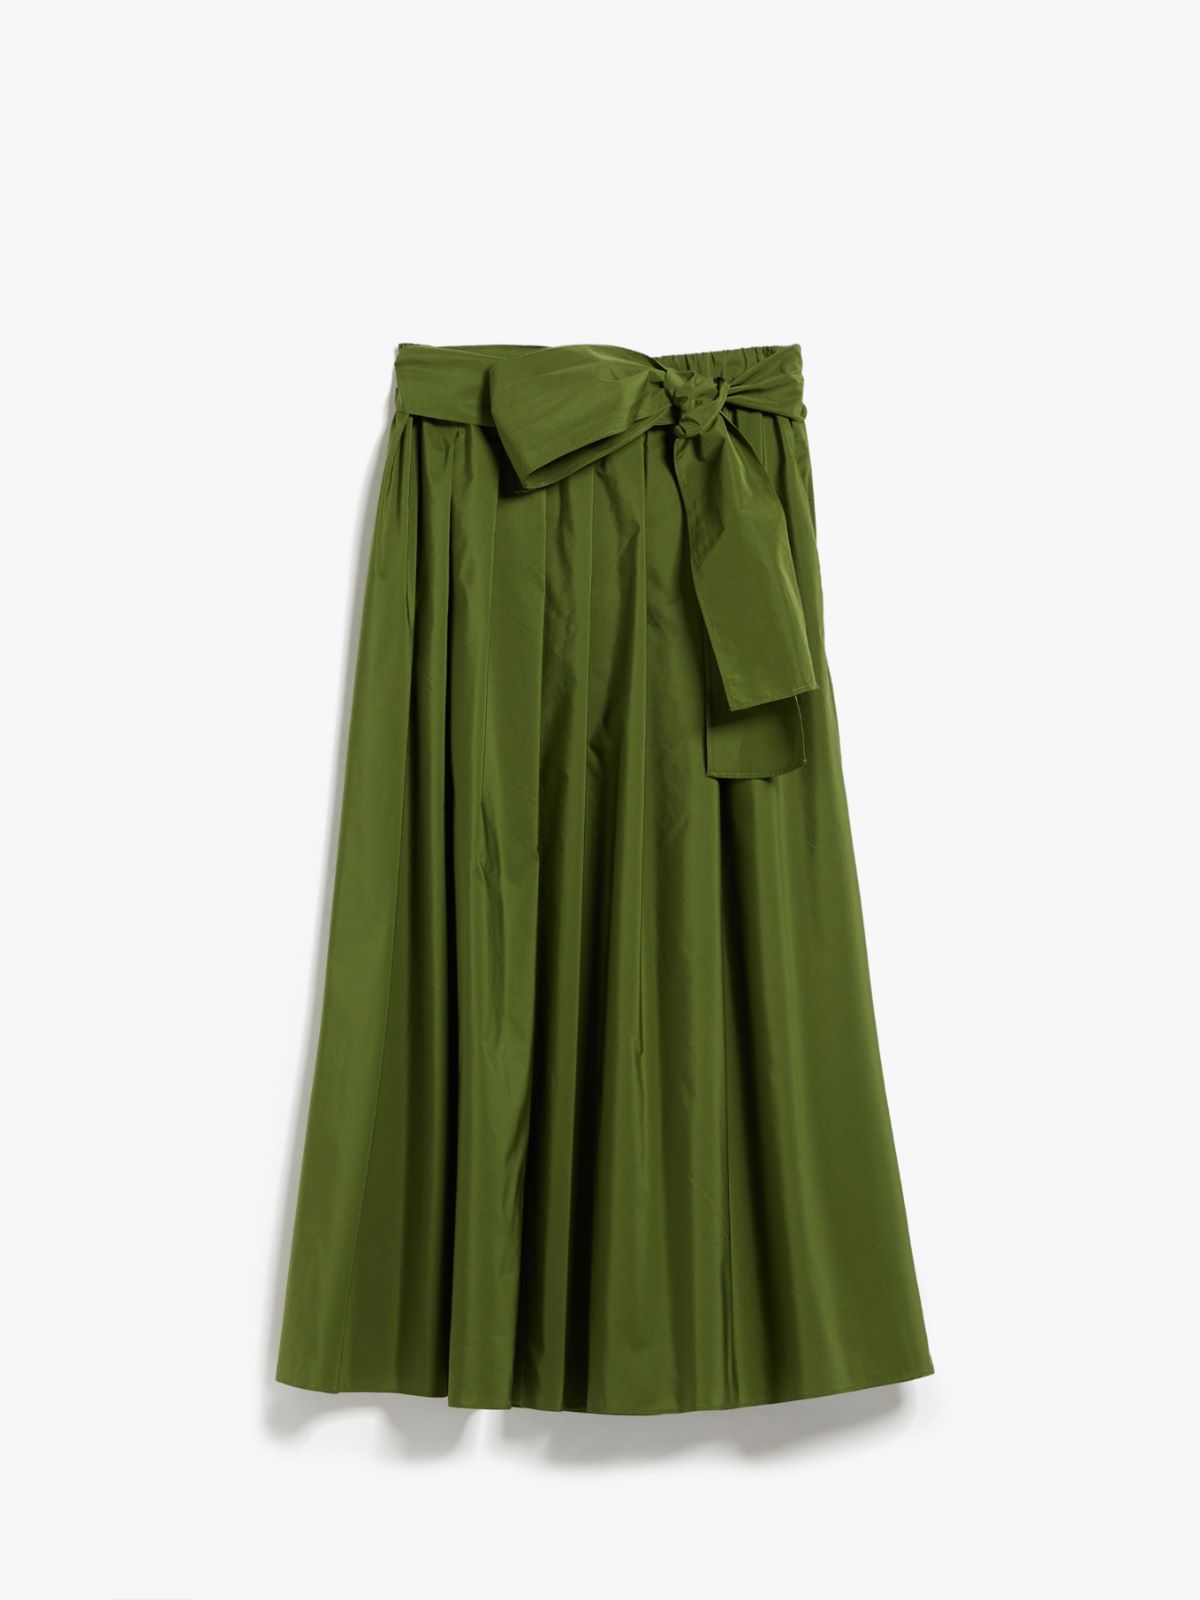 Full skirt in taffeta, green | Weekend Max Mara